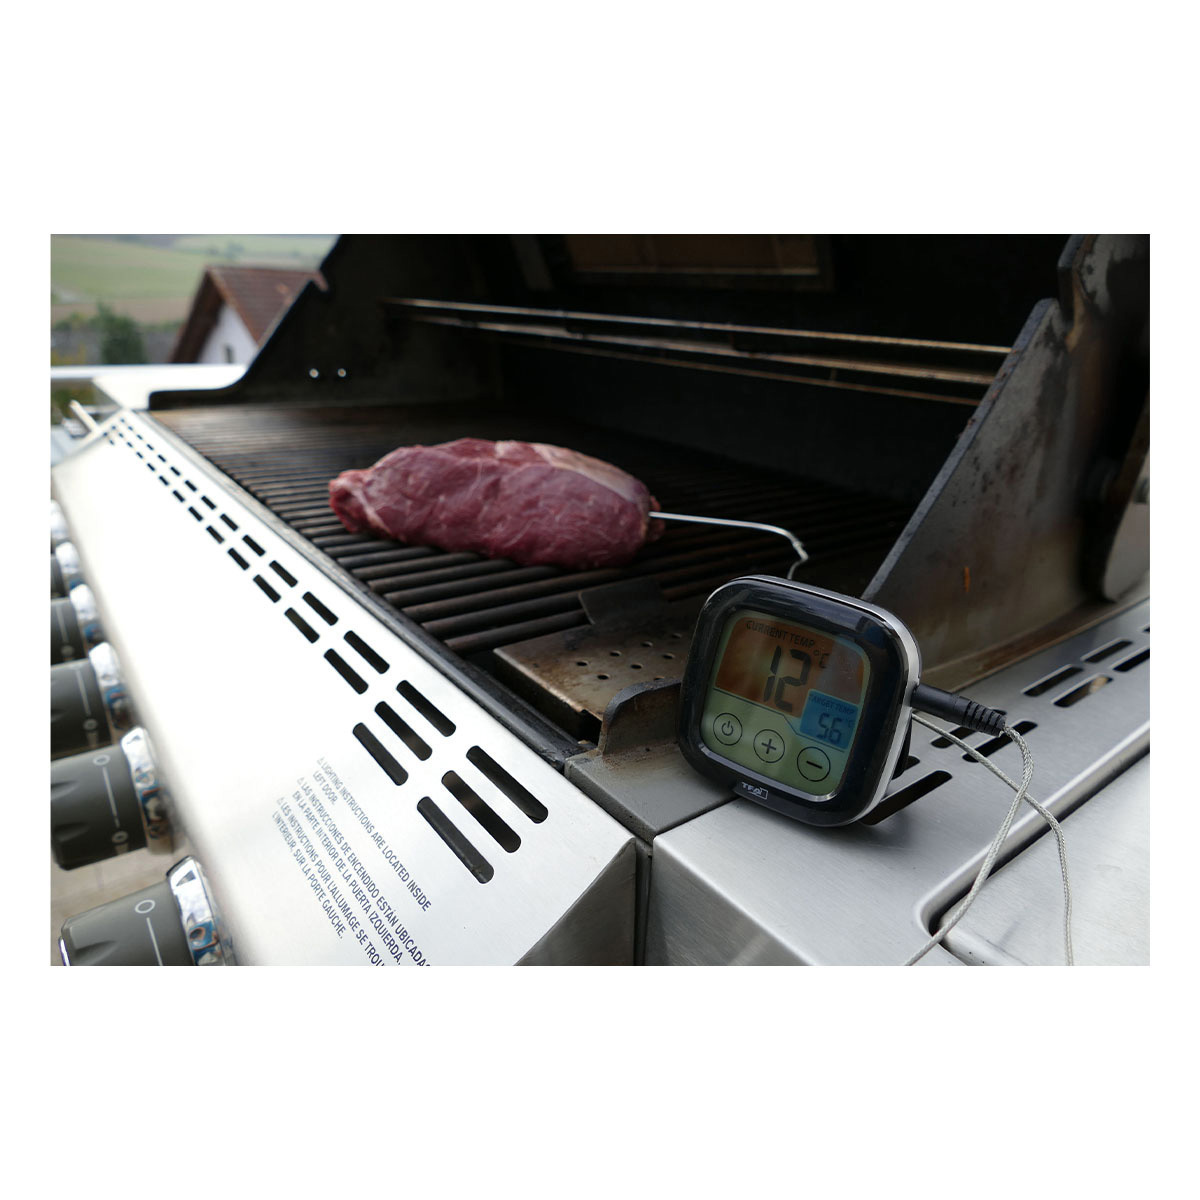 14-1509-01-digitales-grill-bratenthermometer-anwendung1-1200x1200px.jpg